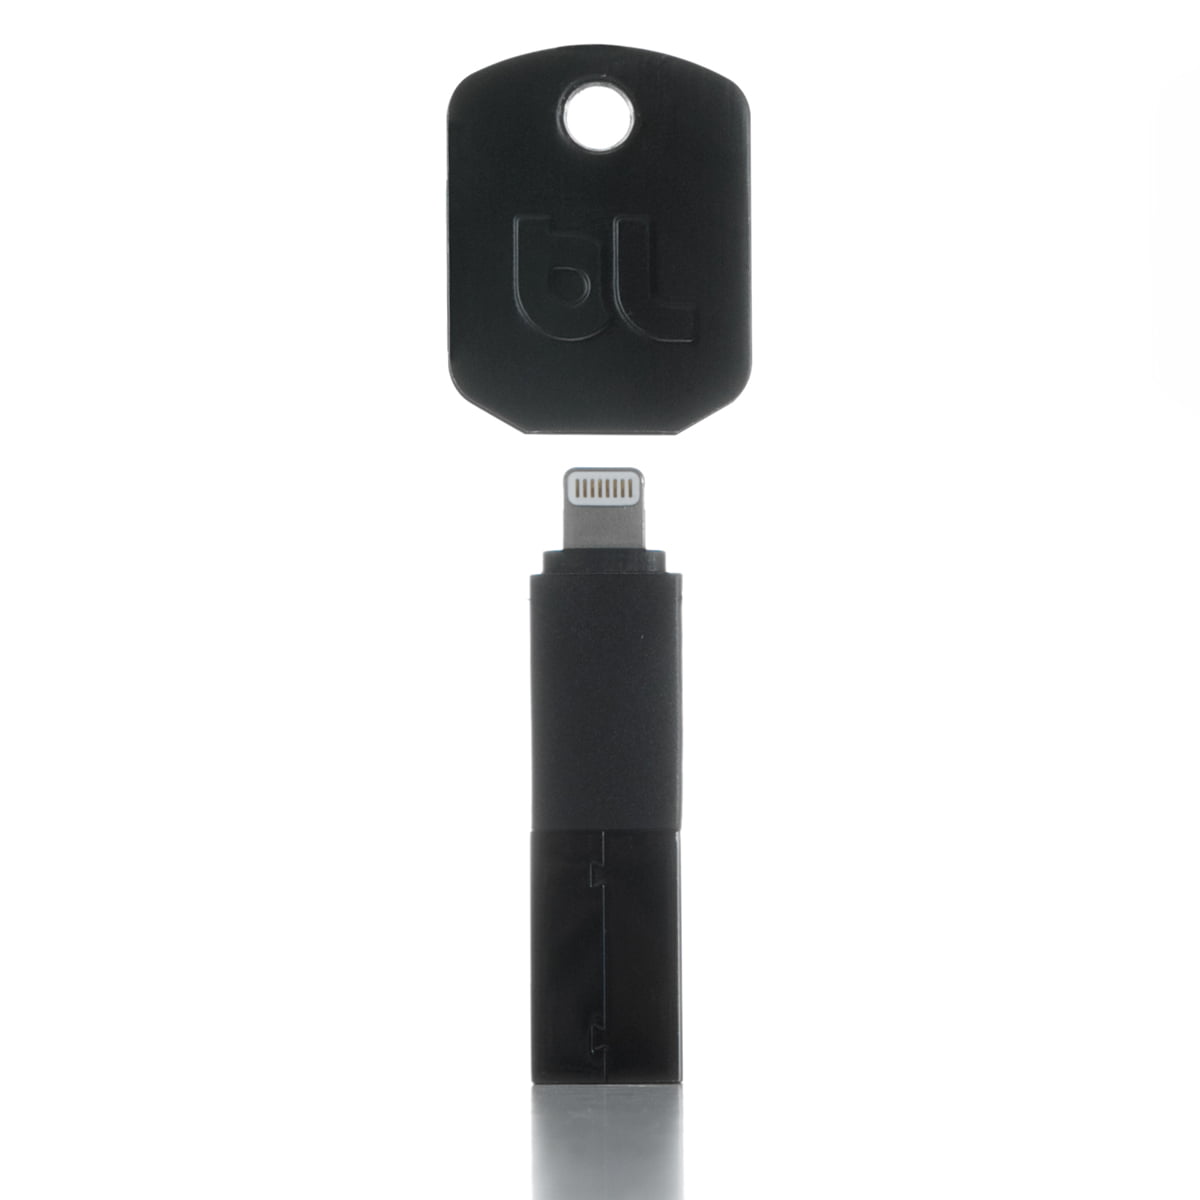 Bluelounge - Kii USB-Adapter (Lightning connector), schwarz